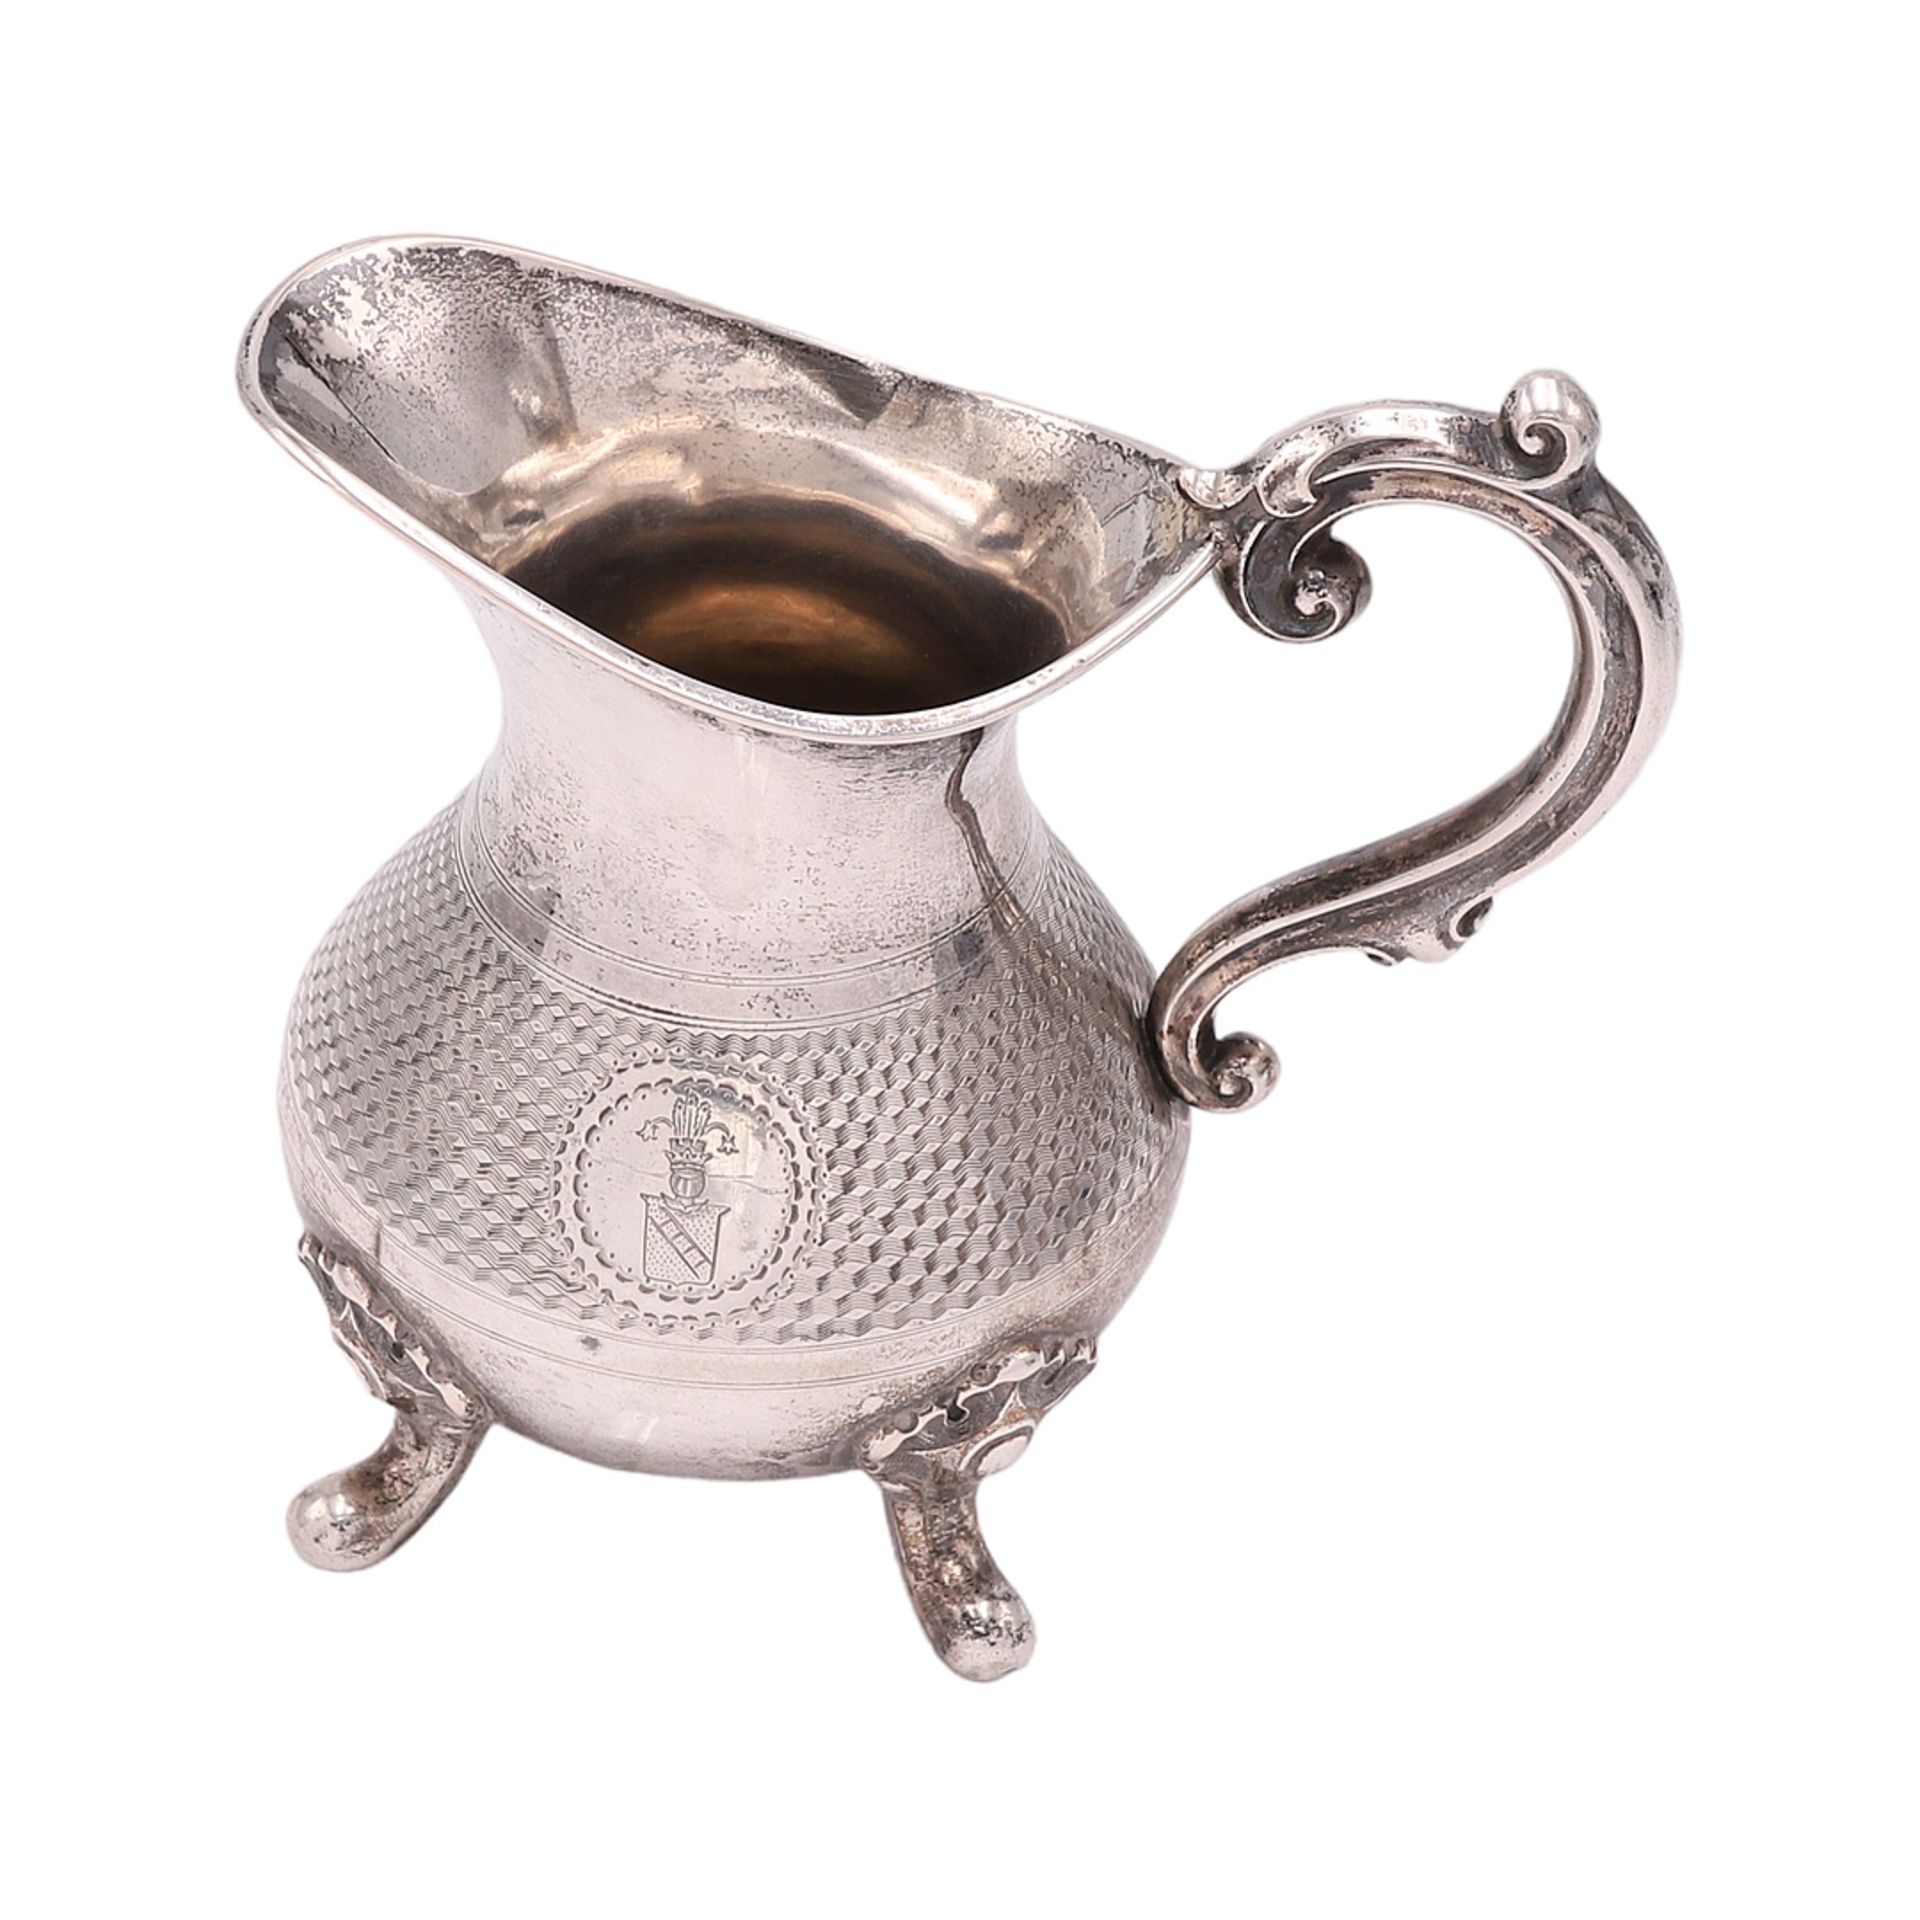 Cream jug, Germany, around 1870